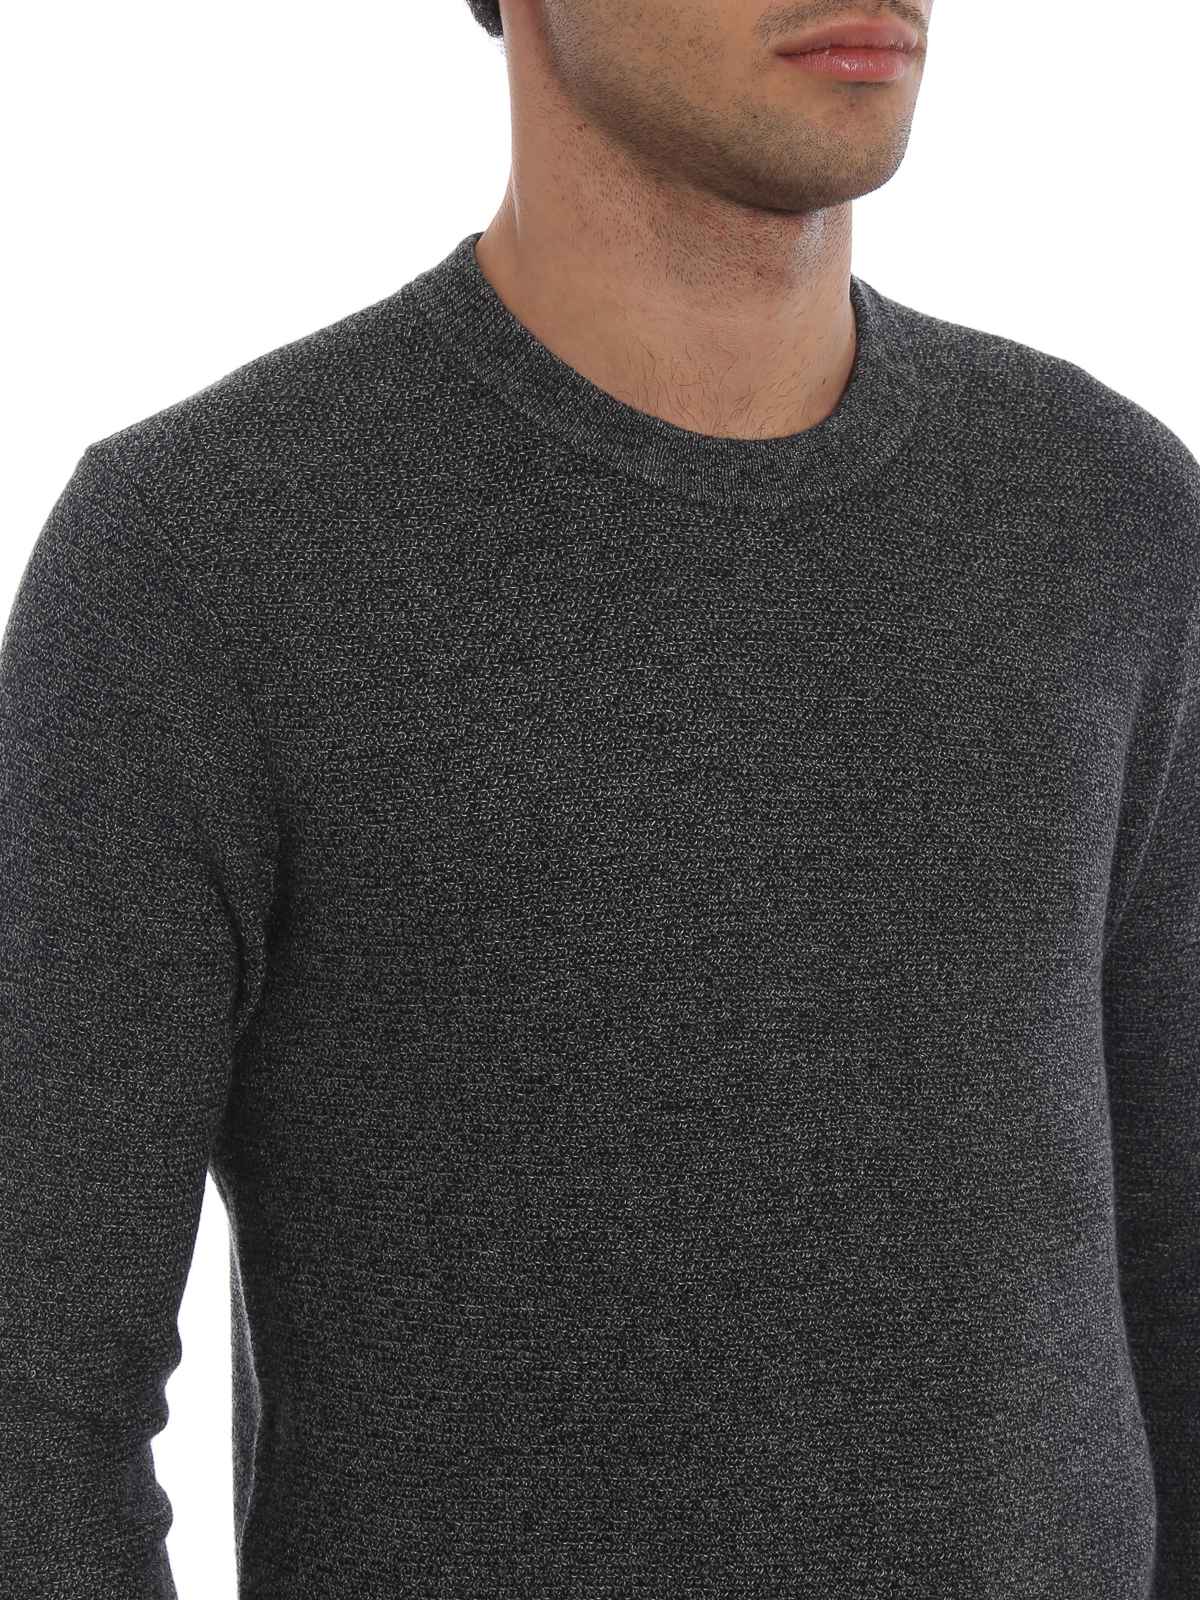 michael kors grey sweater